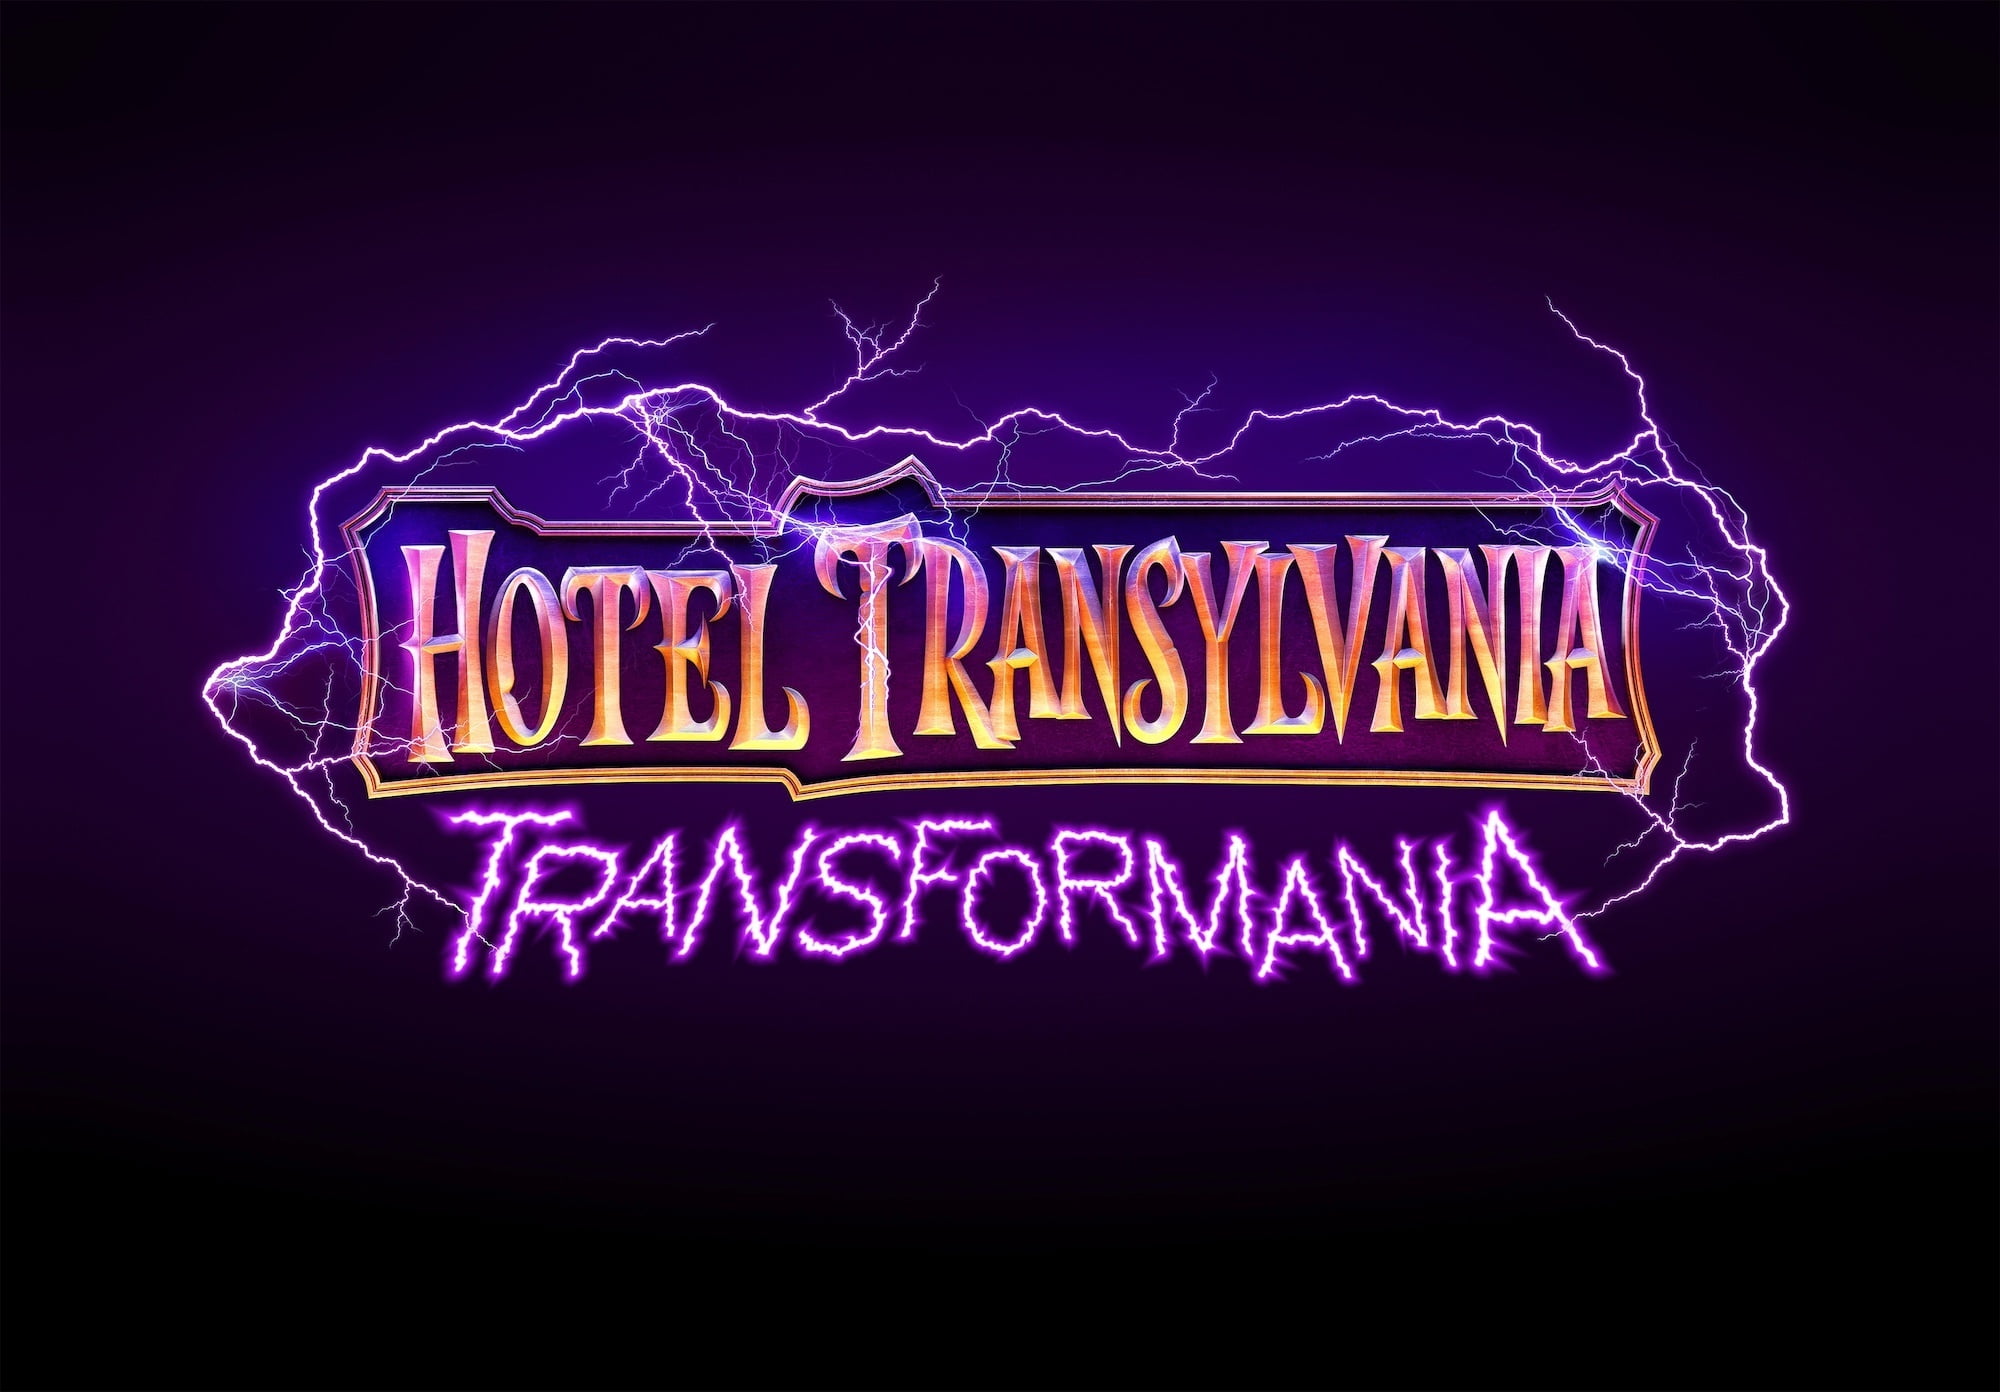 HOTEL TRANSYLVANIA- TRANSFORMANIA